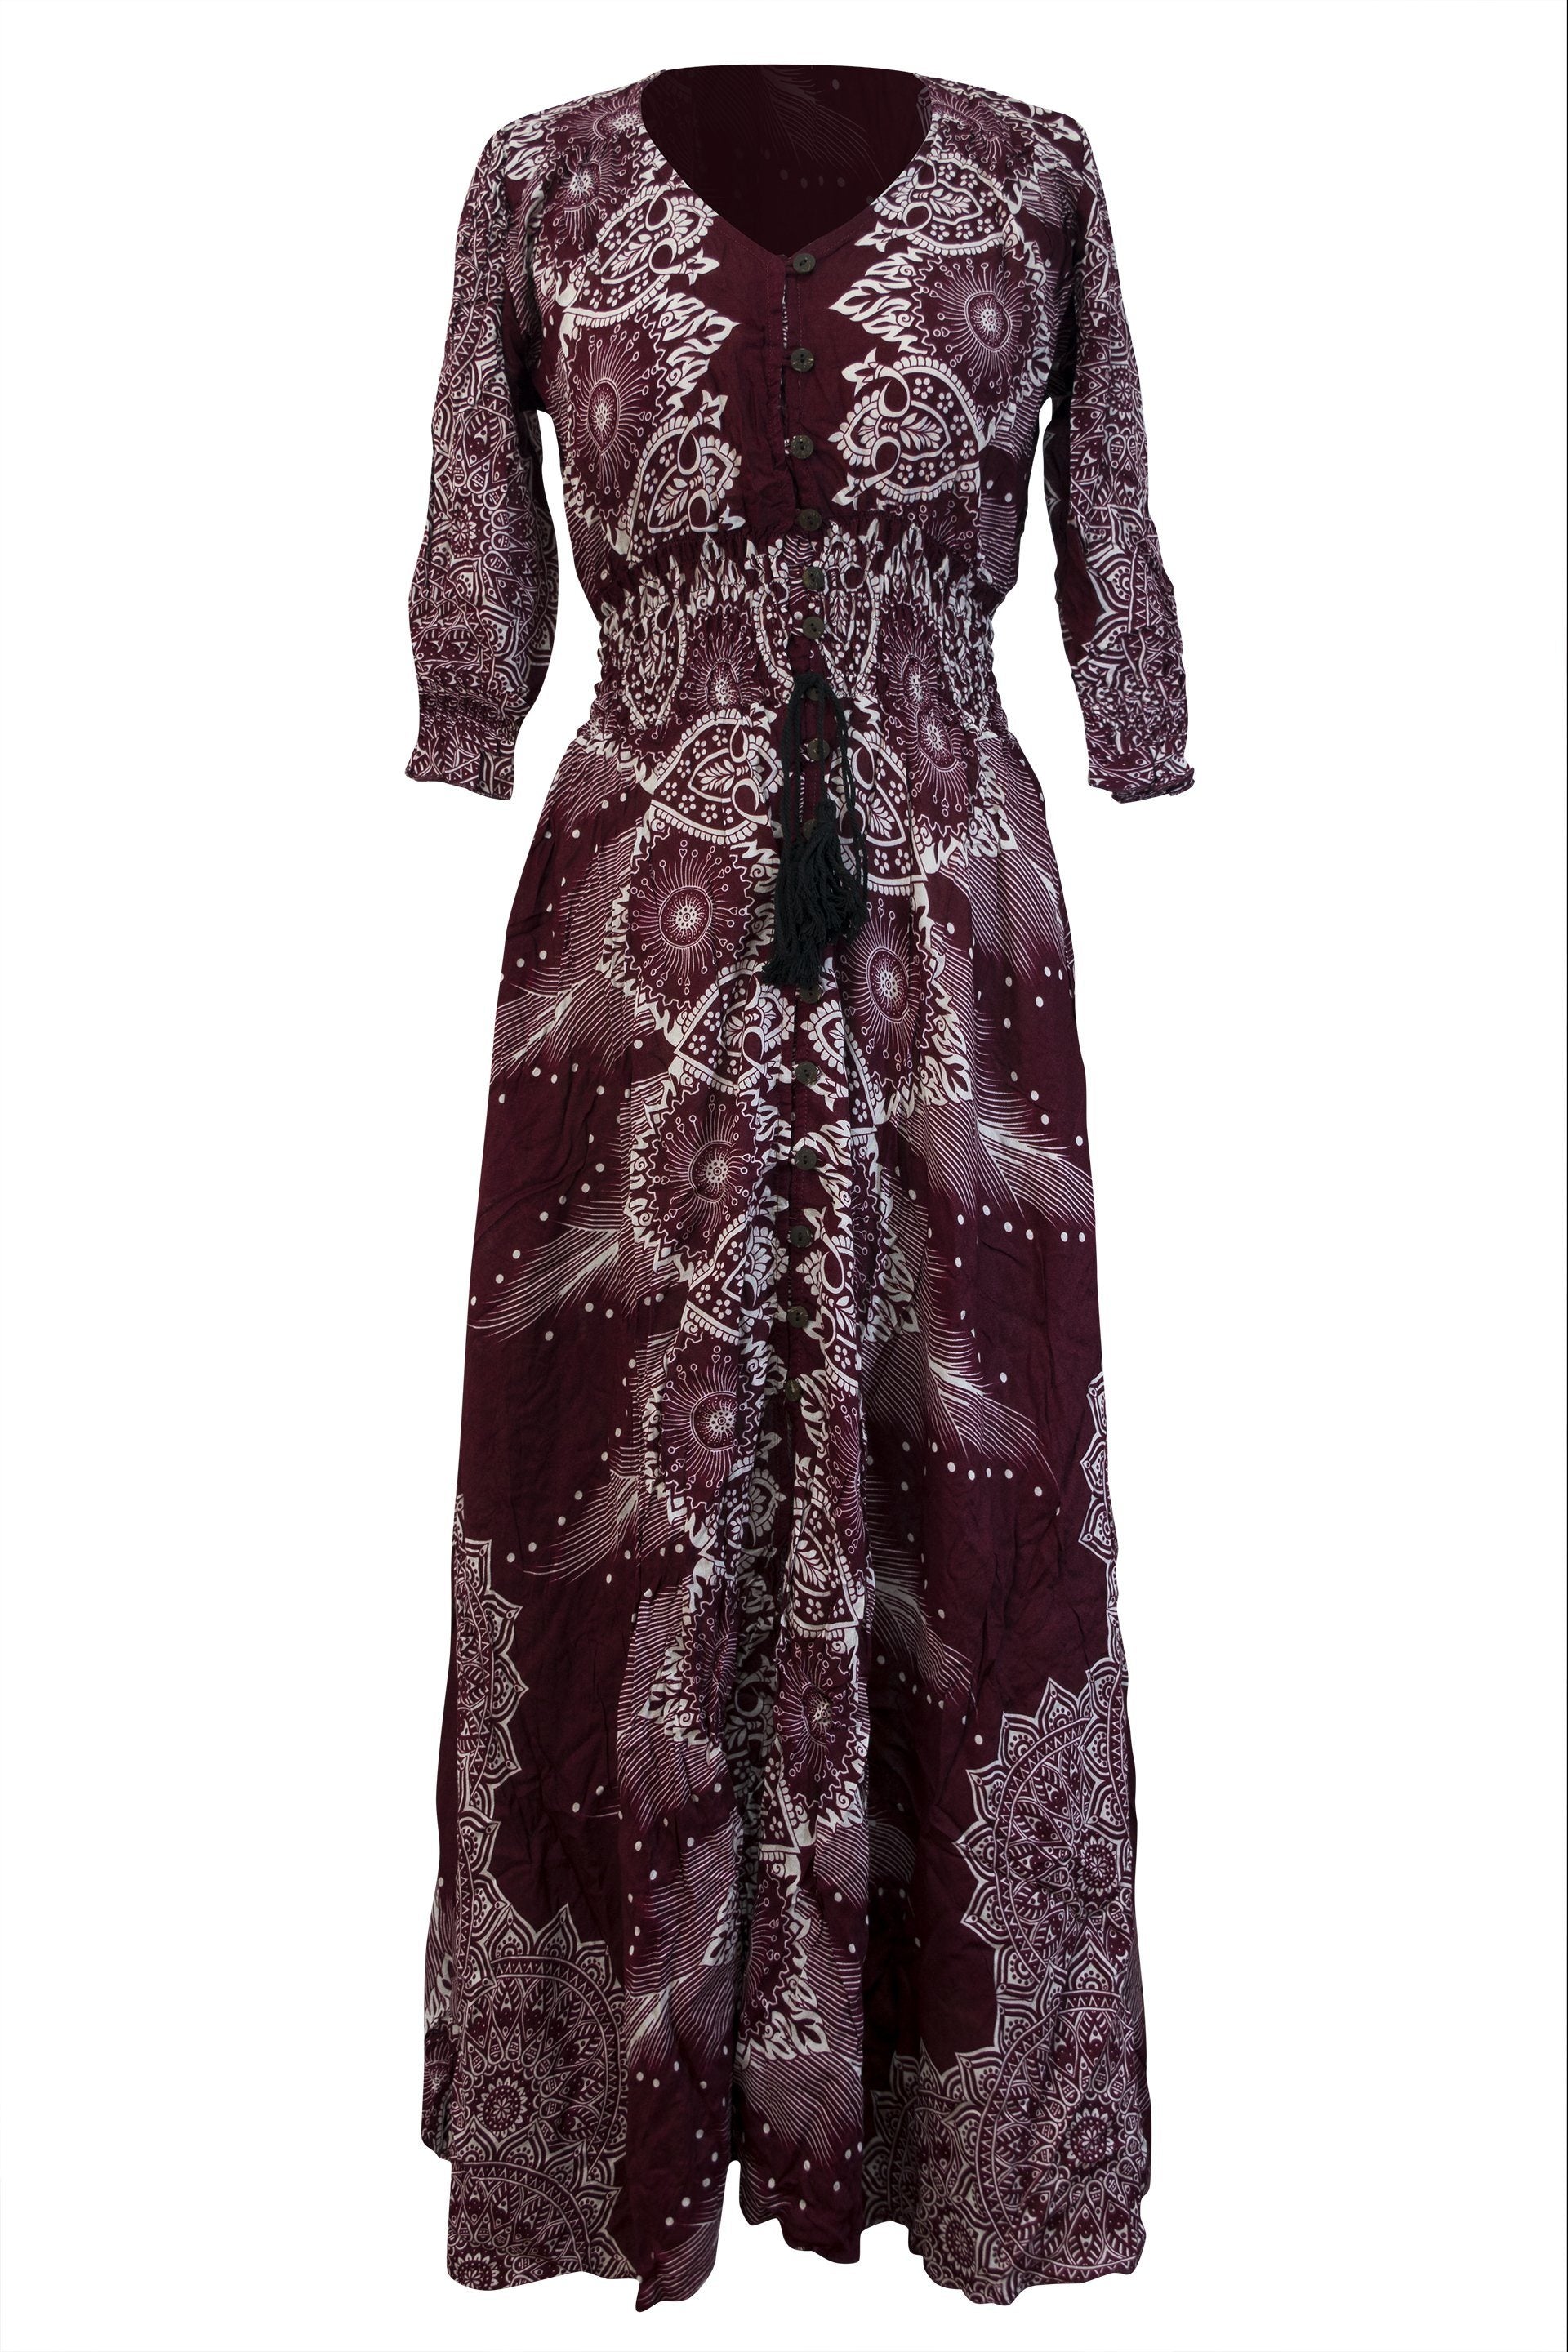 Printed Rayon Dress 3/4 Sleeve Mandala Casual Maxi Dress - CCCollections